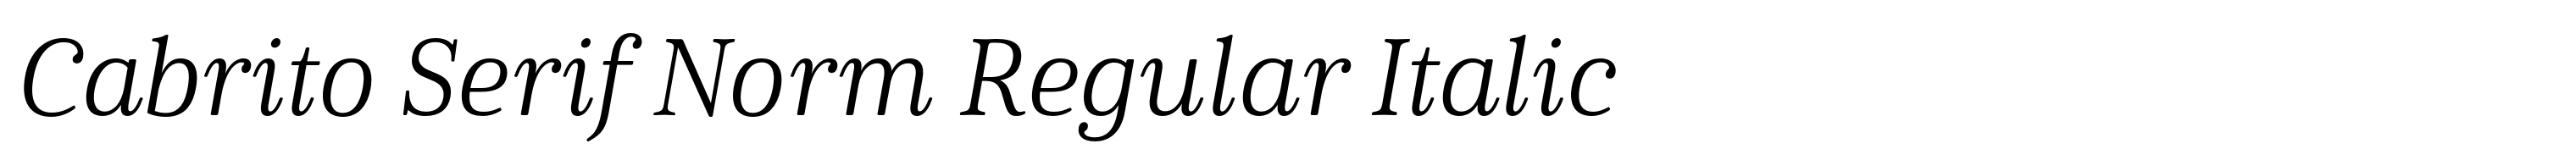 Cabrito Serif Norm Regular Italic